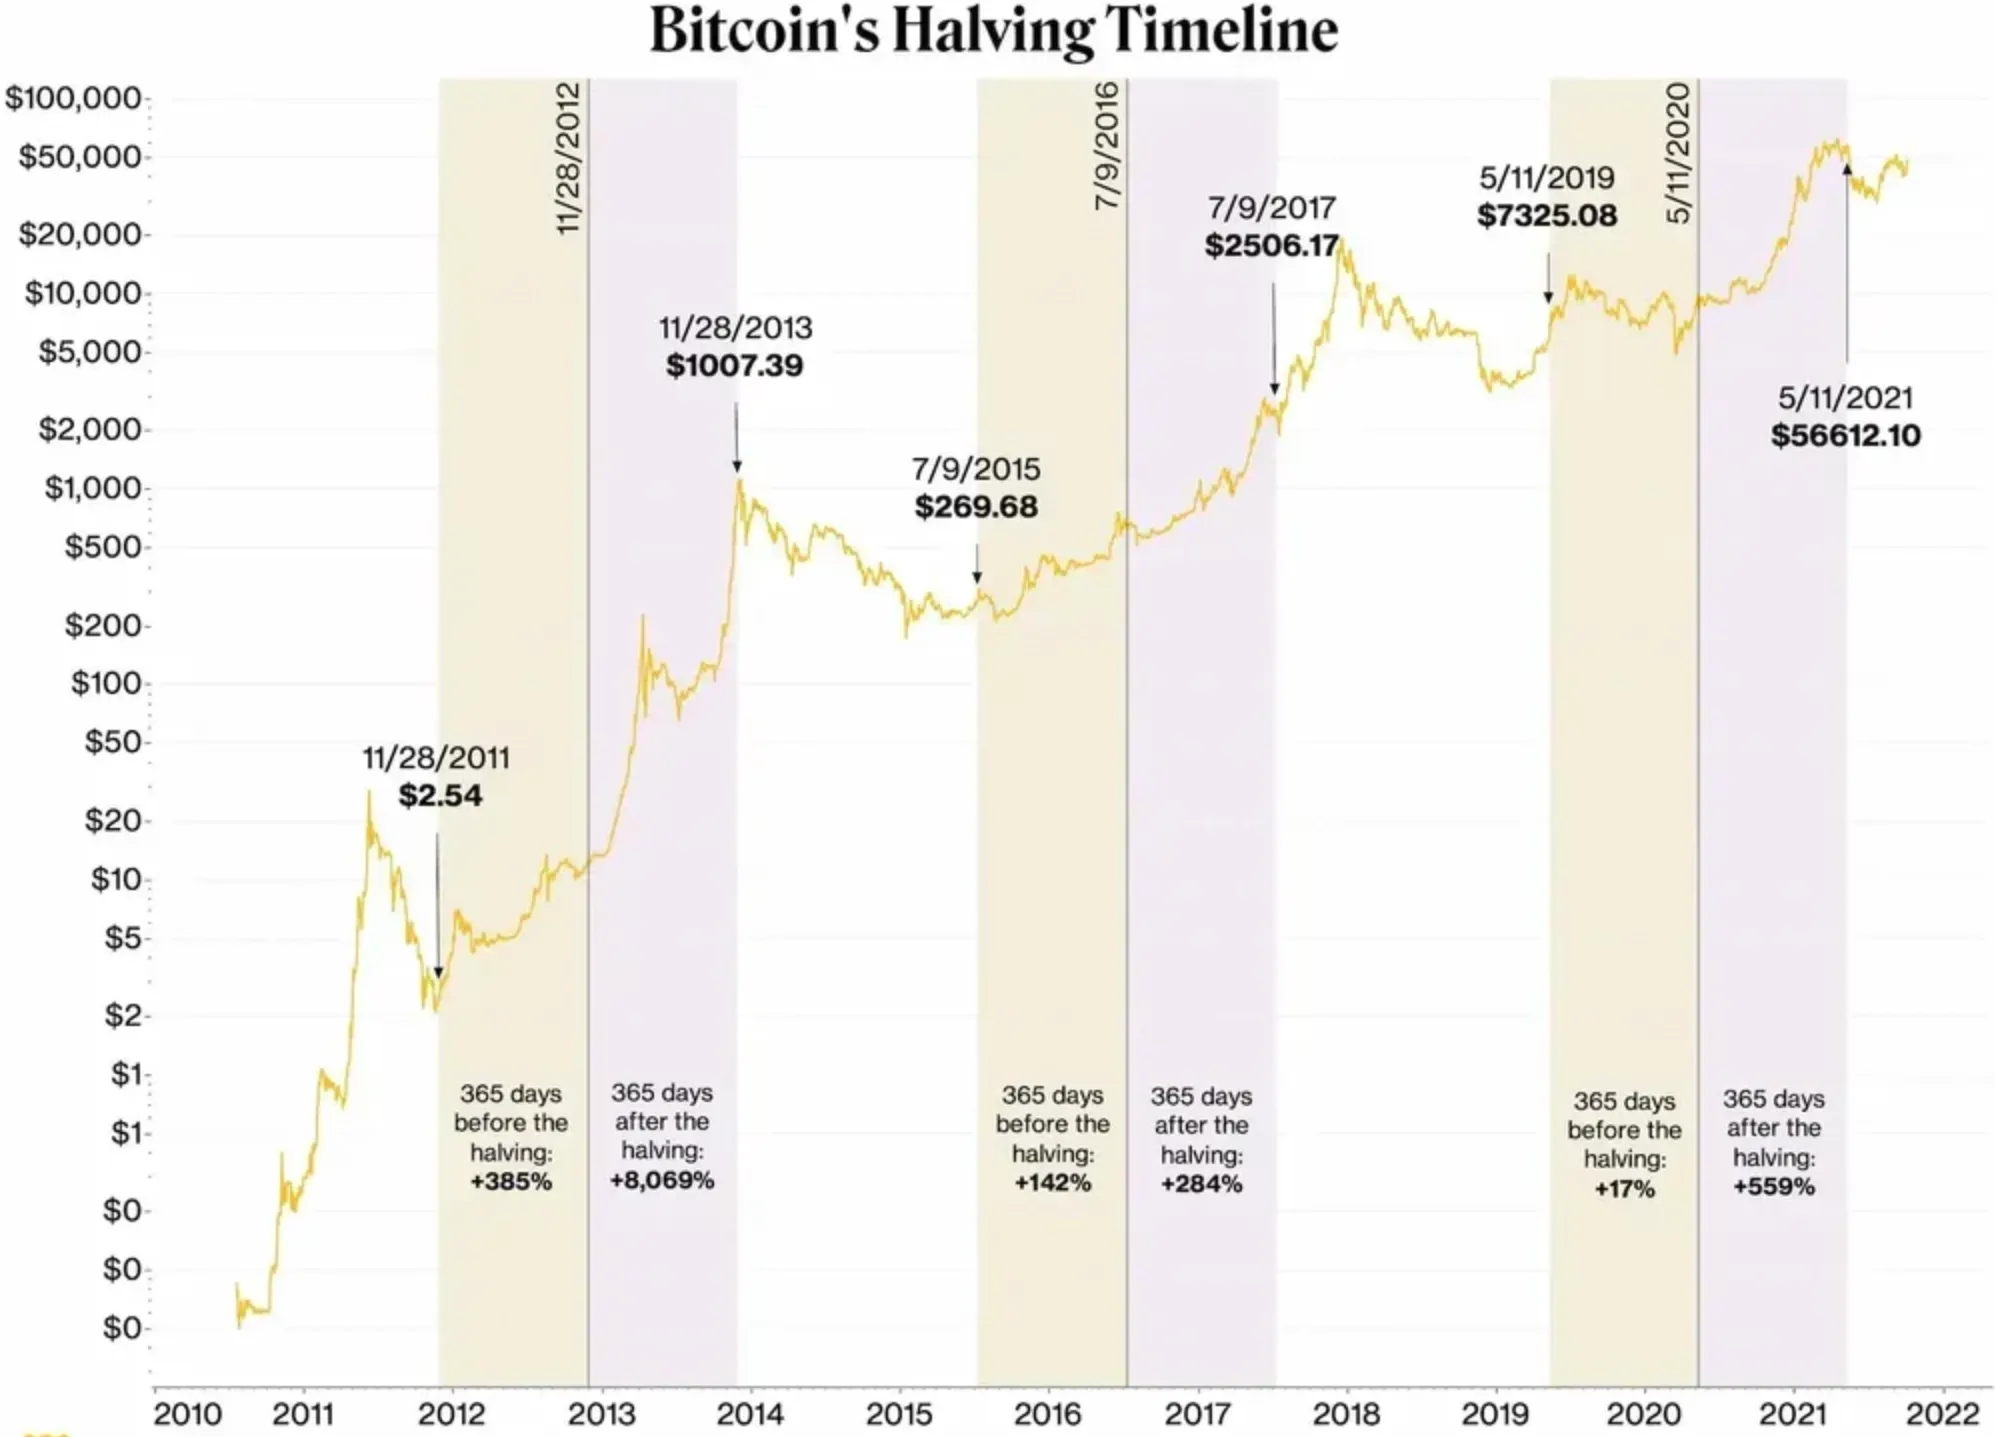 Auswirkung des Bitcoin-Halving auf den BTC-Kurs, Quelle: CoinDesk.com